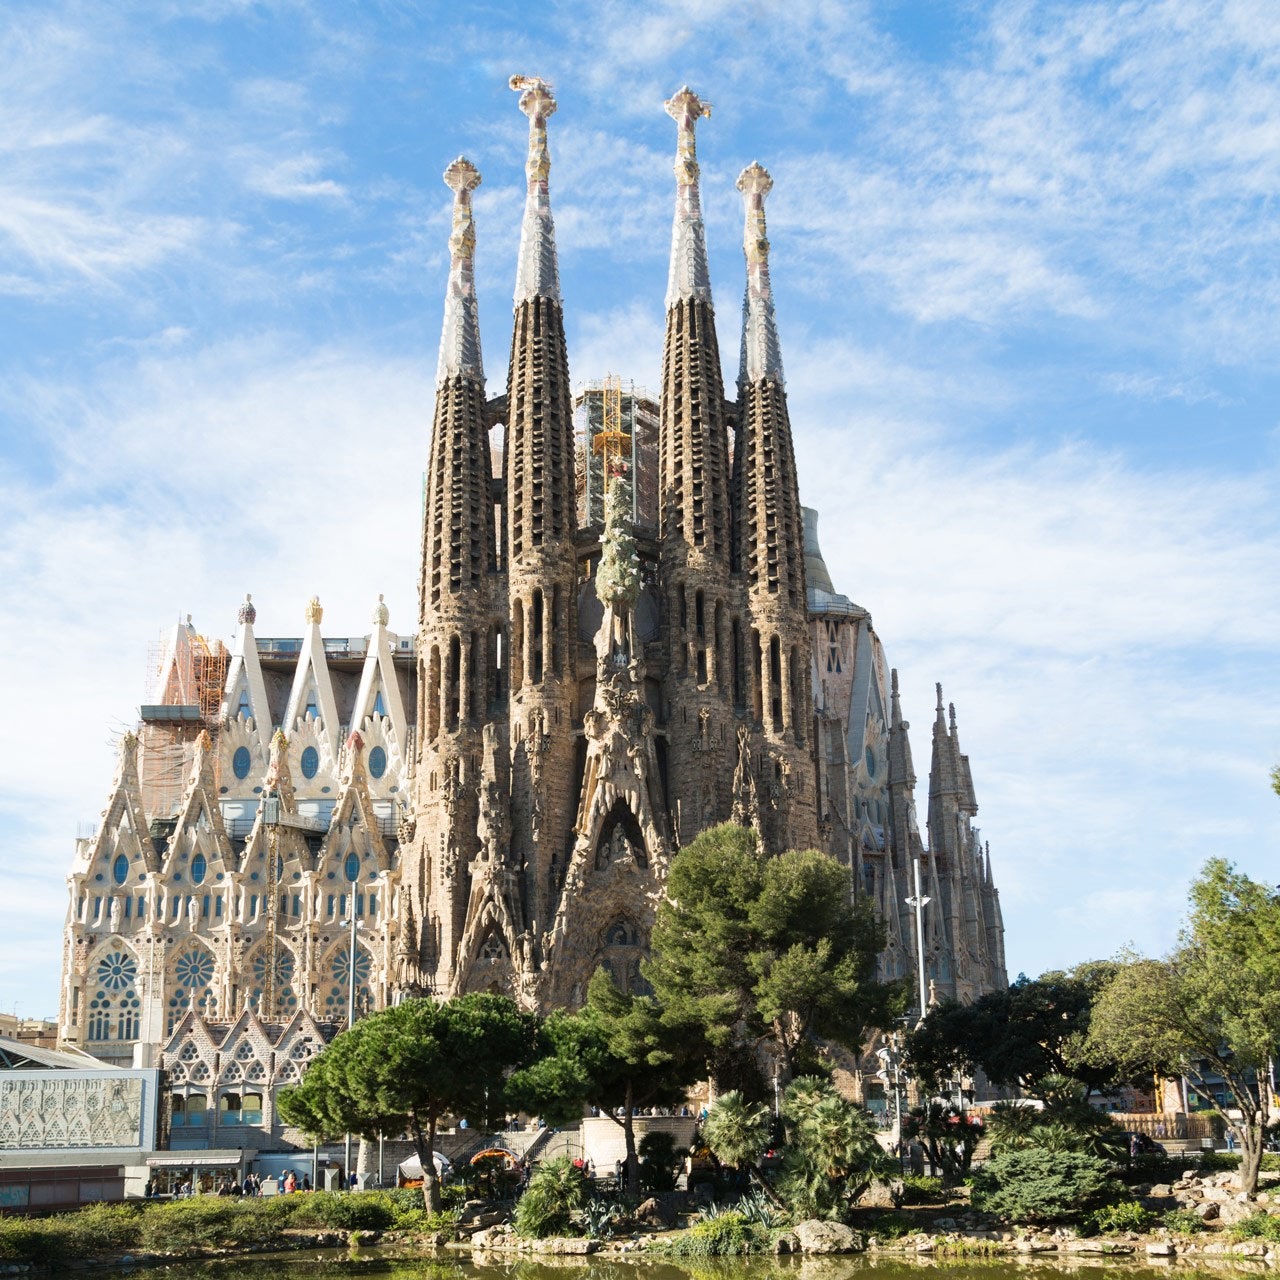 Sagrada-Familia-Barcelona-Spain-conde-nast-traveller-13feb17-iStock.jpg